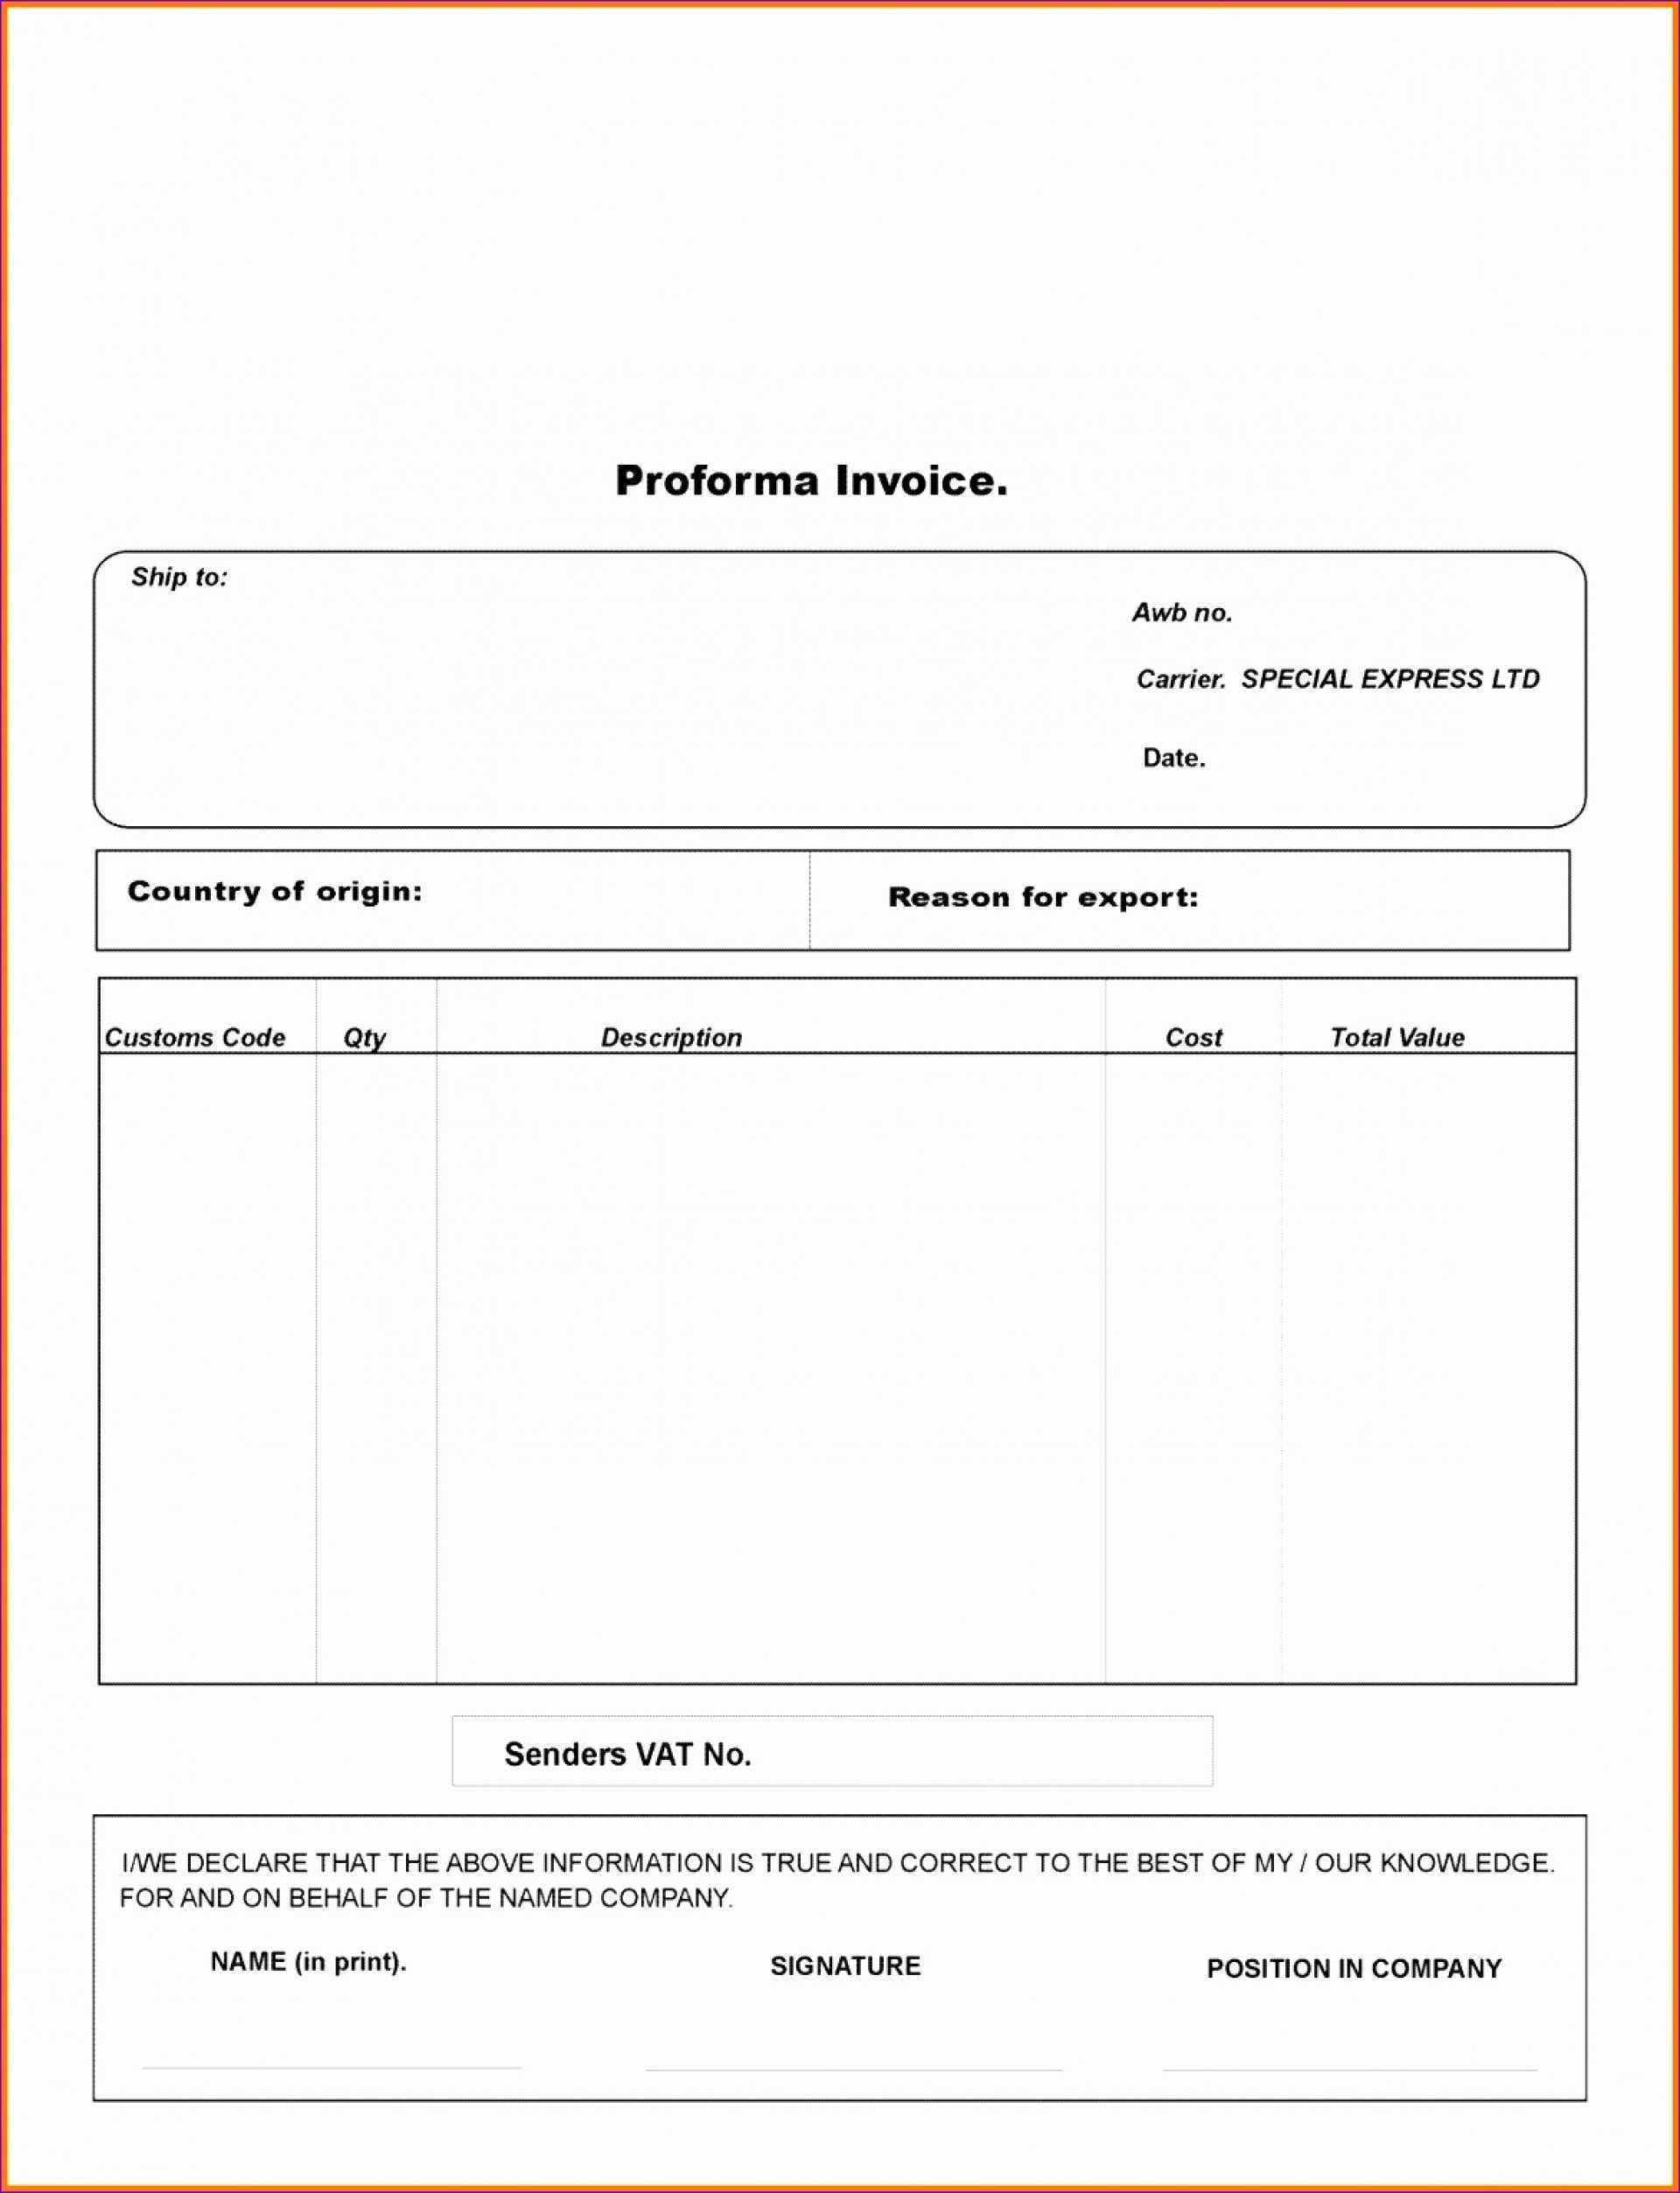 028-proforma-invoice-template-pdf-free-download-ideas-simple-pertaining